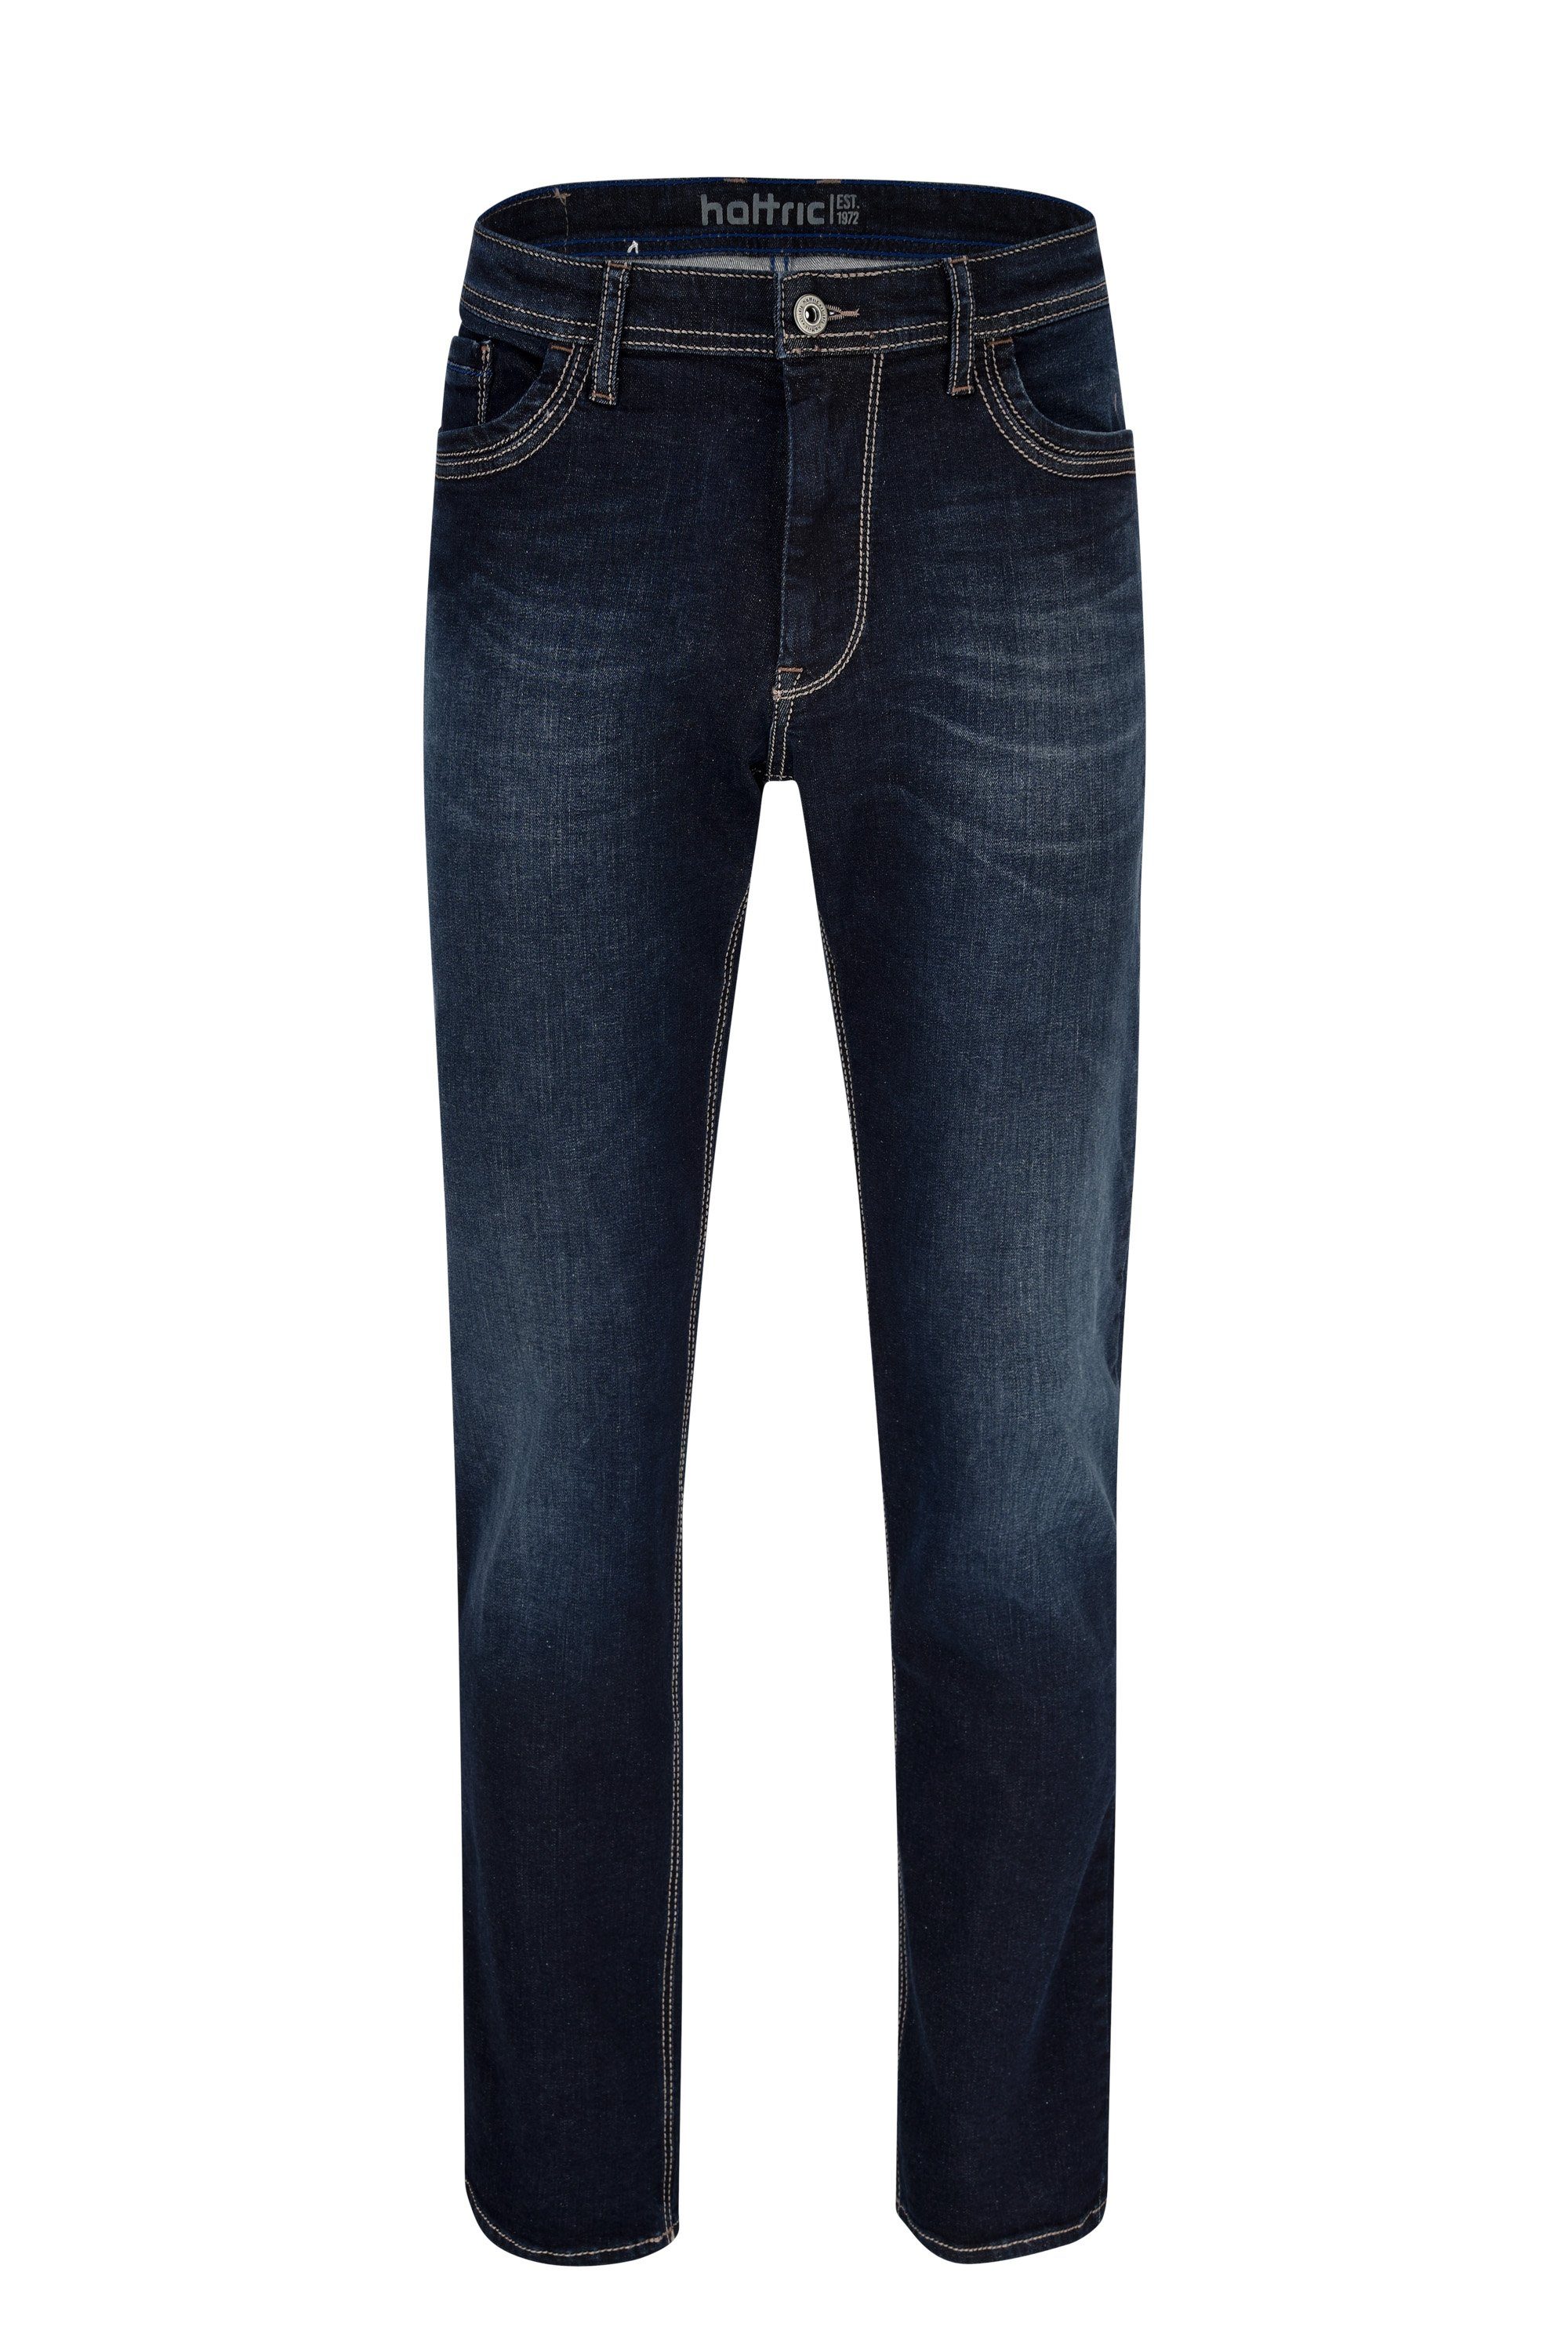 HUNTER 9696.95 HATTRIC 5-Pocket-Jeans - blue HIGH-STRETCH Hattric dark 688385